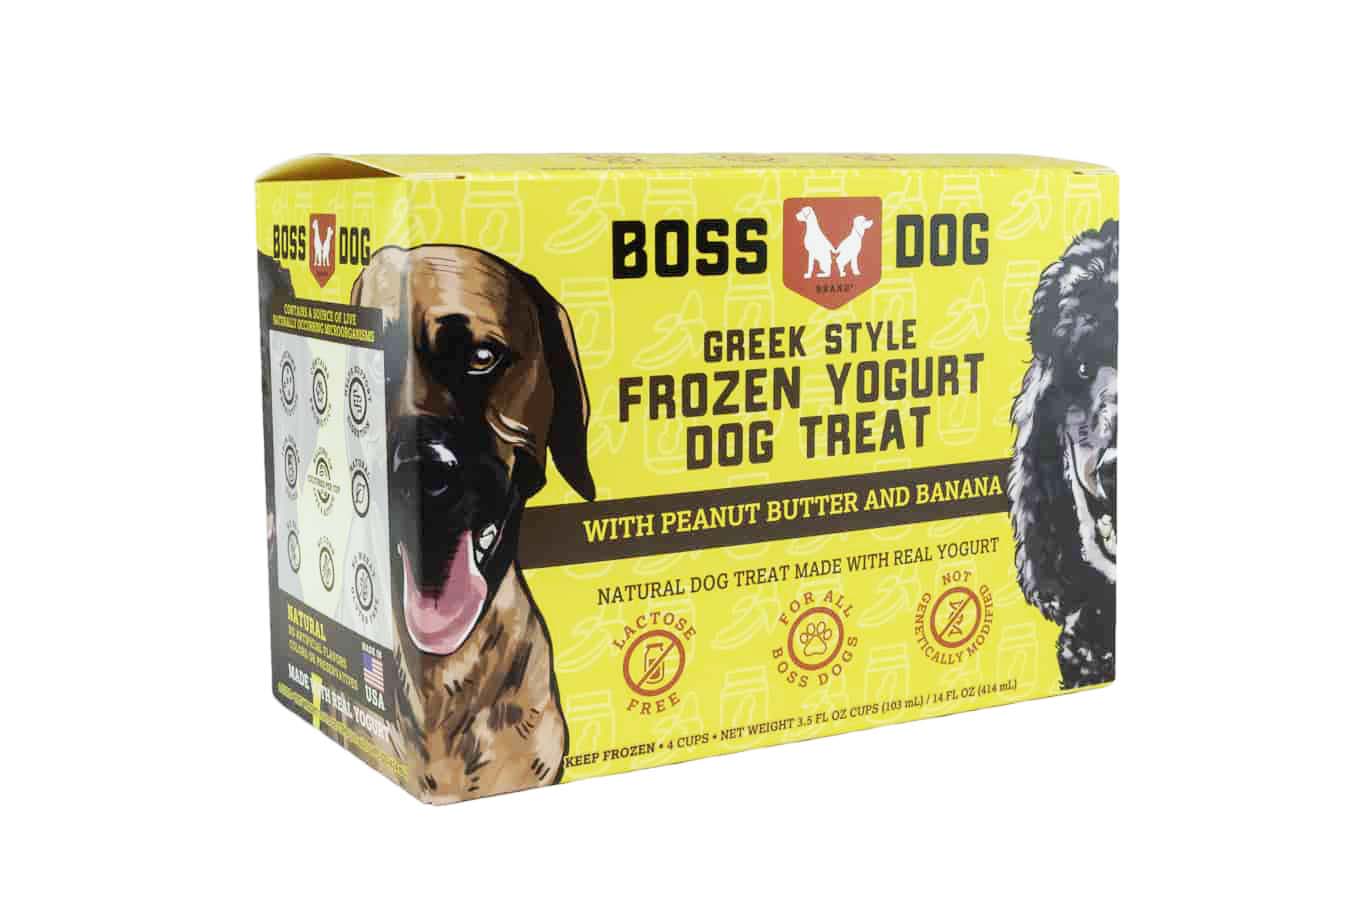 Brand: Boss Dog